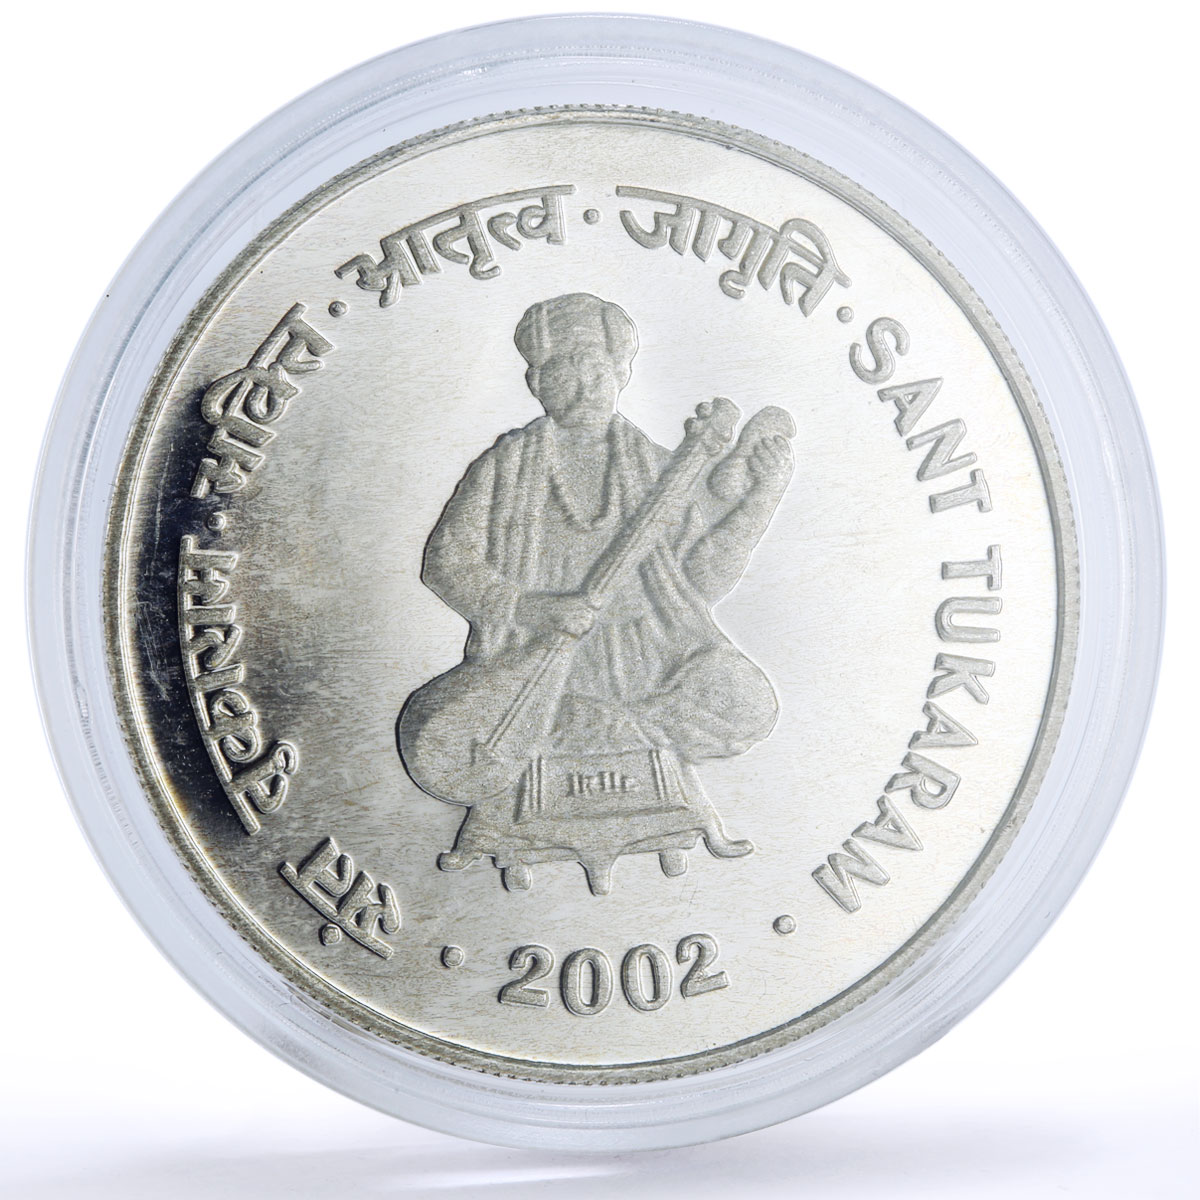 India 100 rupees Poet Sant Tukaram Statue Poetry Literature proof Ag coin 2002